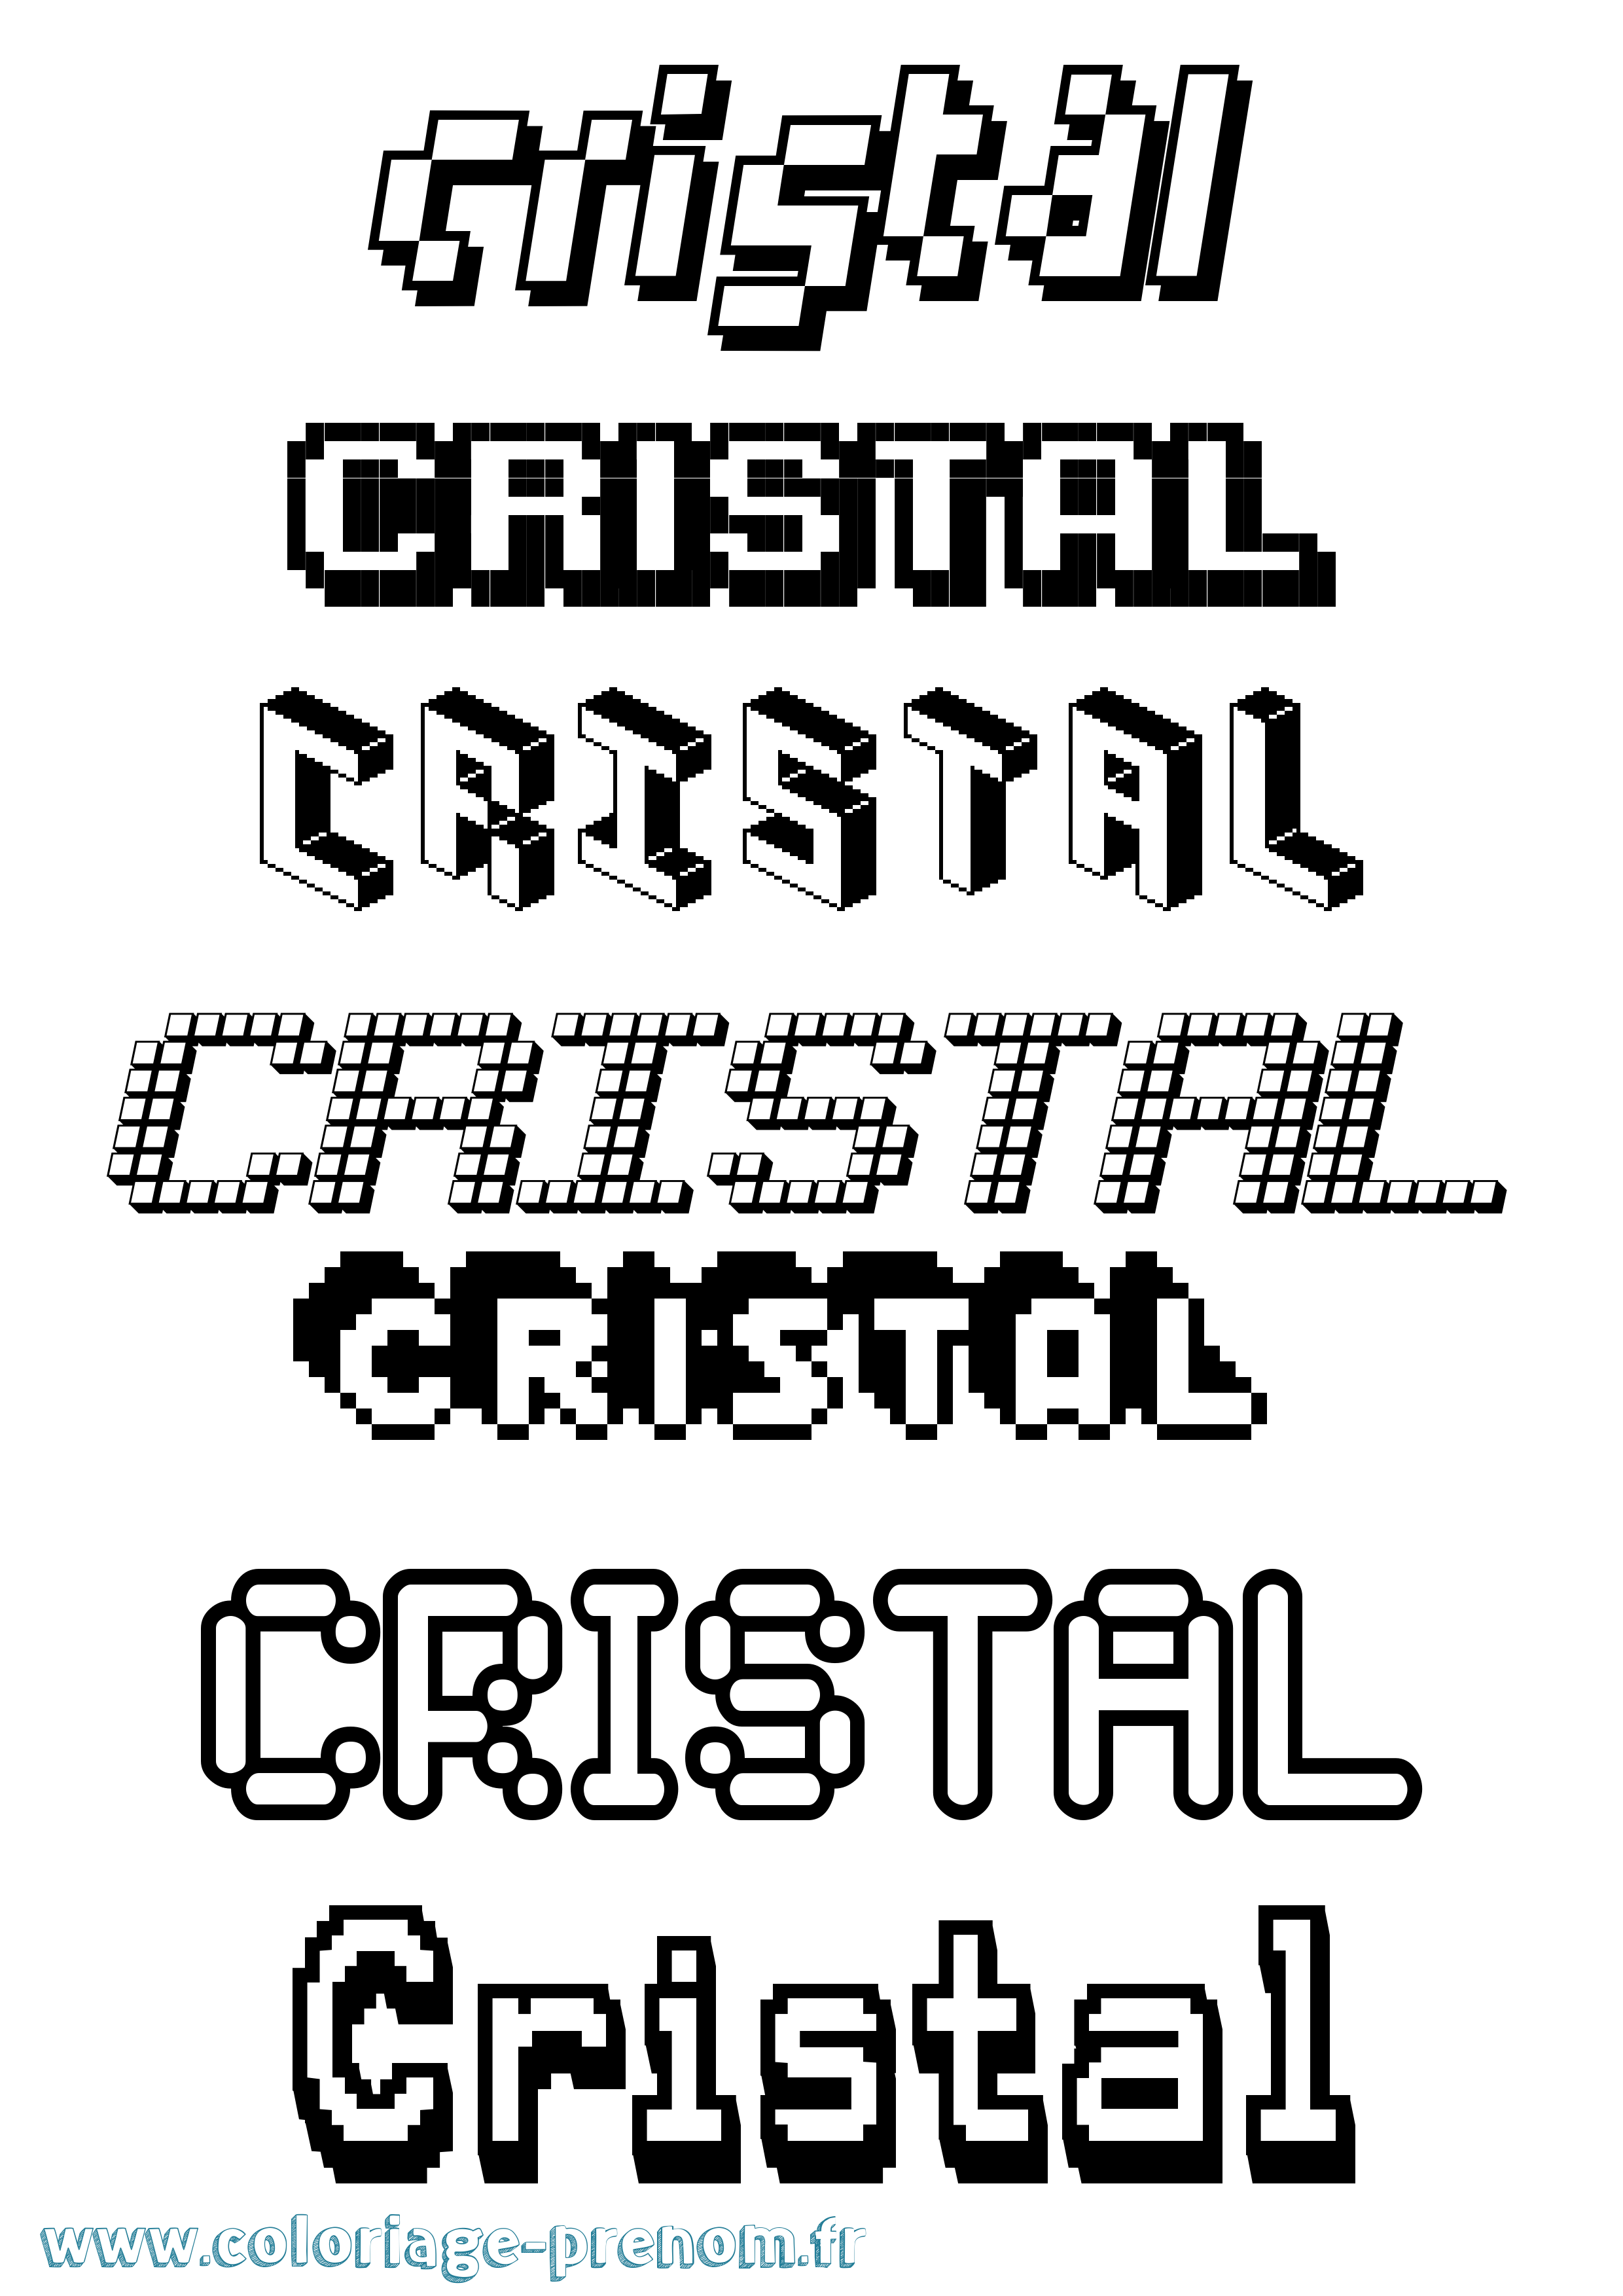 Coloriage prénom Cristal Pixel